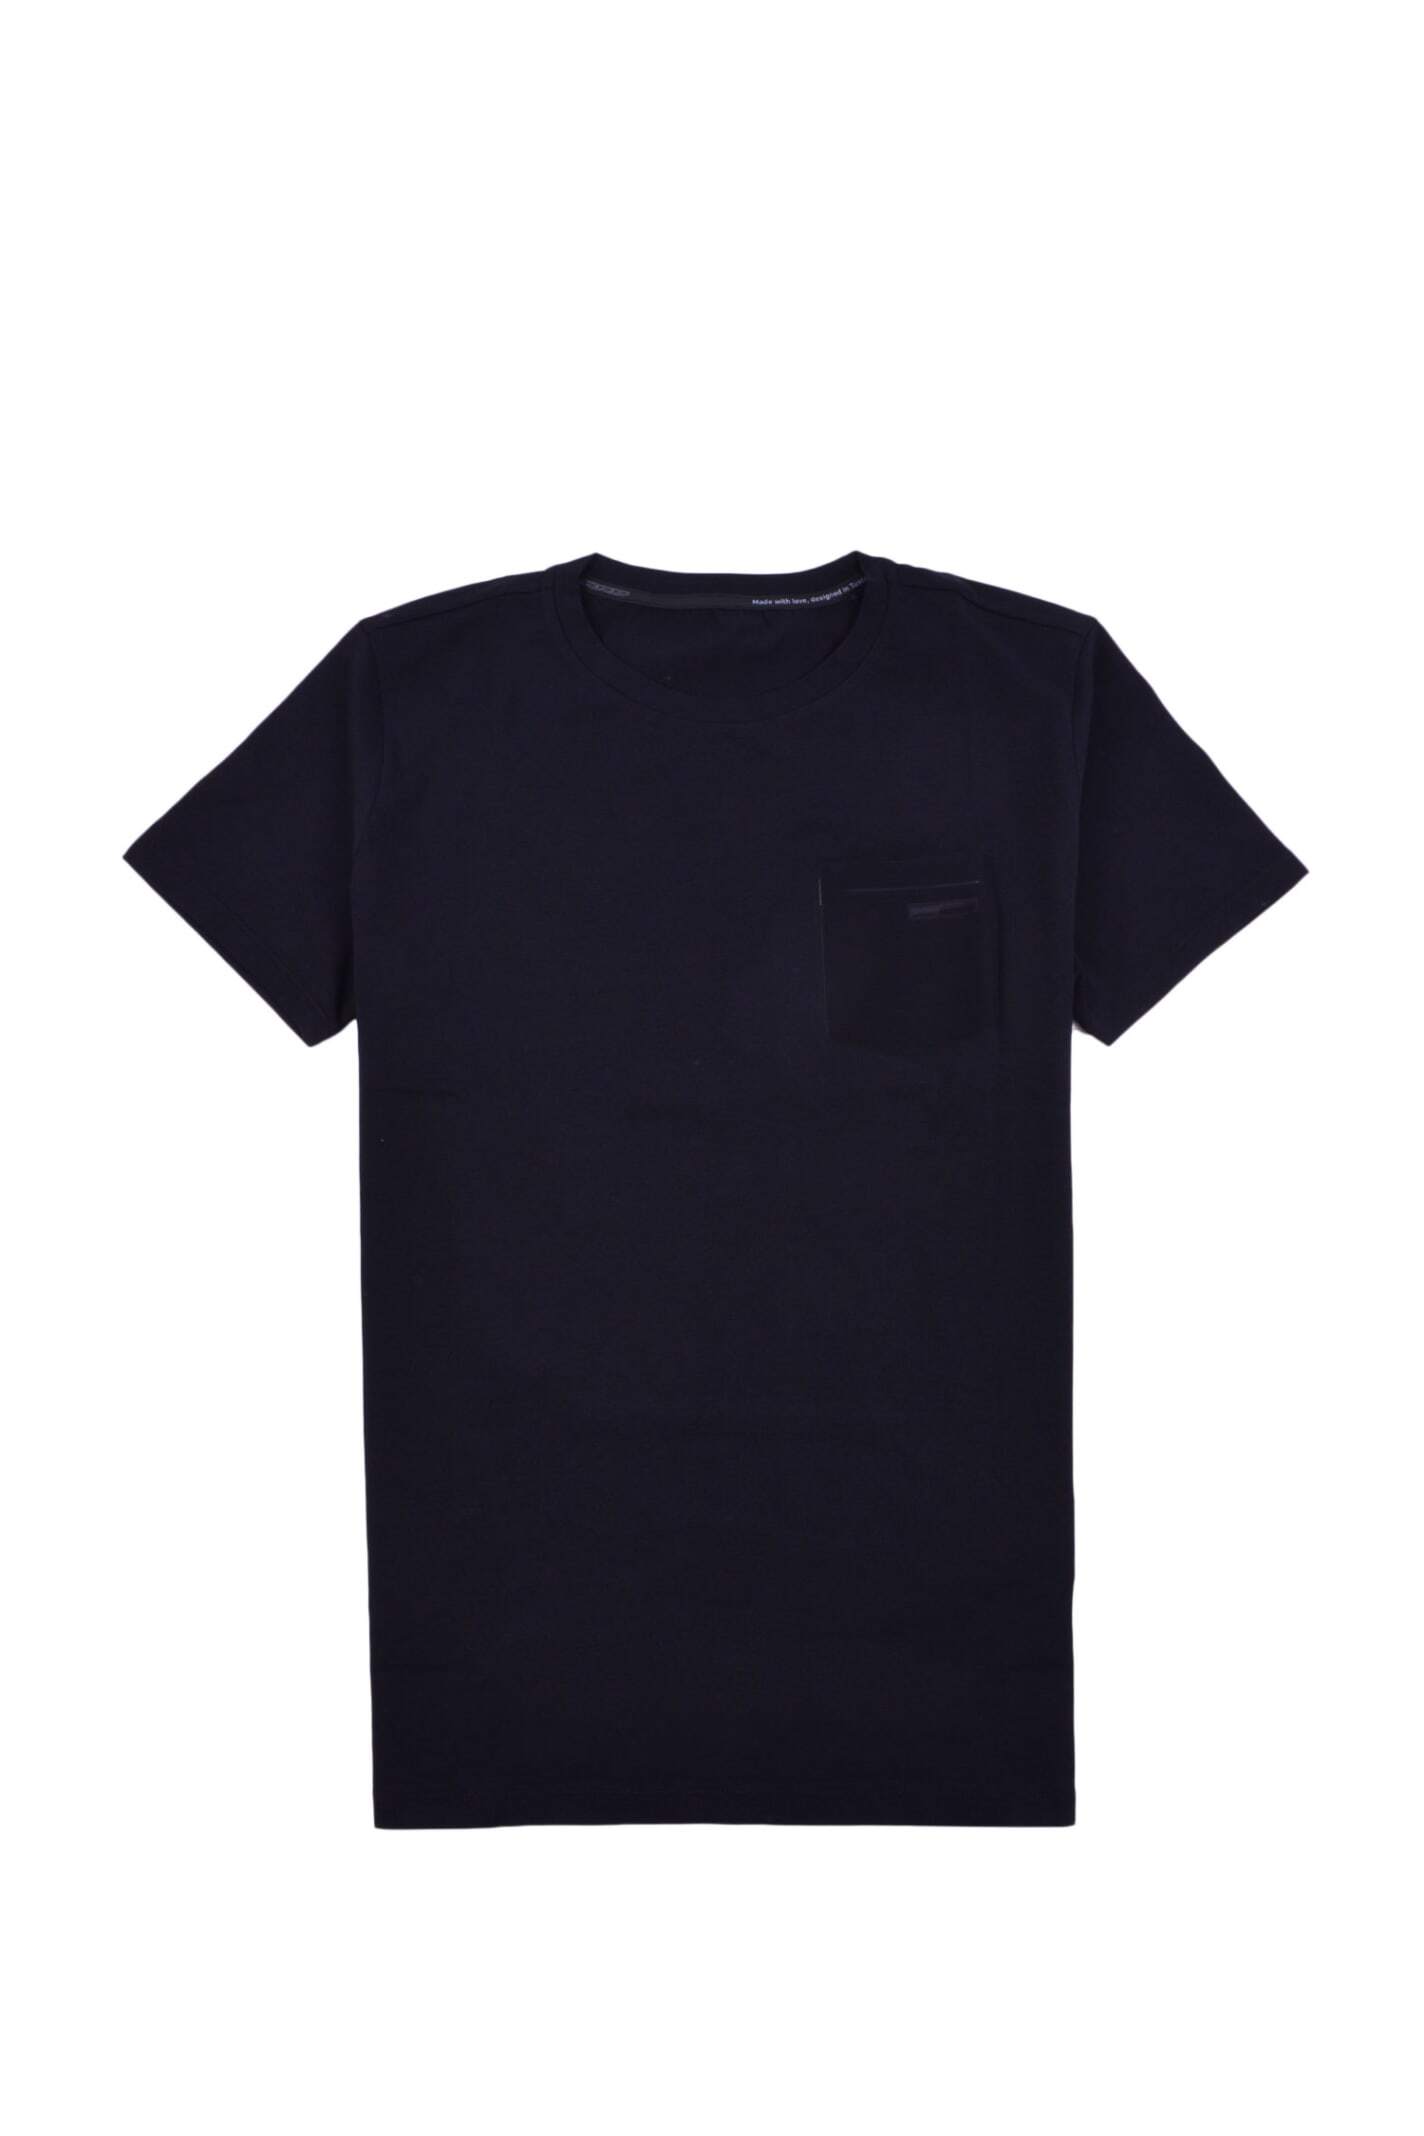 RRD - ROBERTO RICCI DESIGN ロベルト・リッチ・デザイン ブラック Black Tシャツ メンズ 春夏2023 SES136 10 【関税・送料無料】【ラッピング無料】 ia